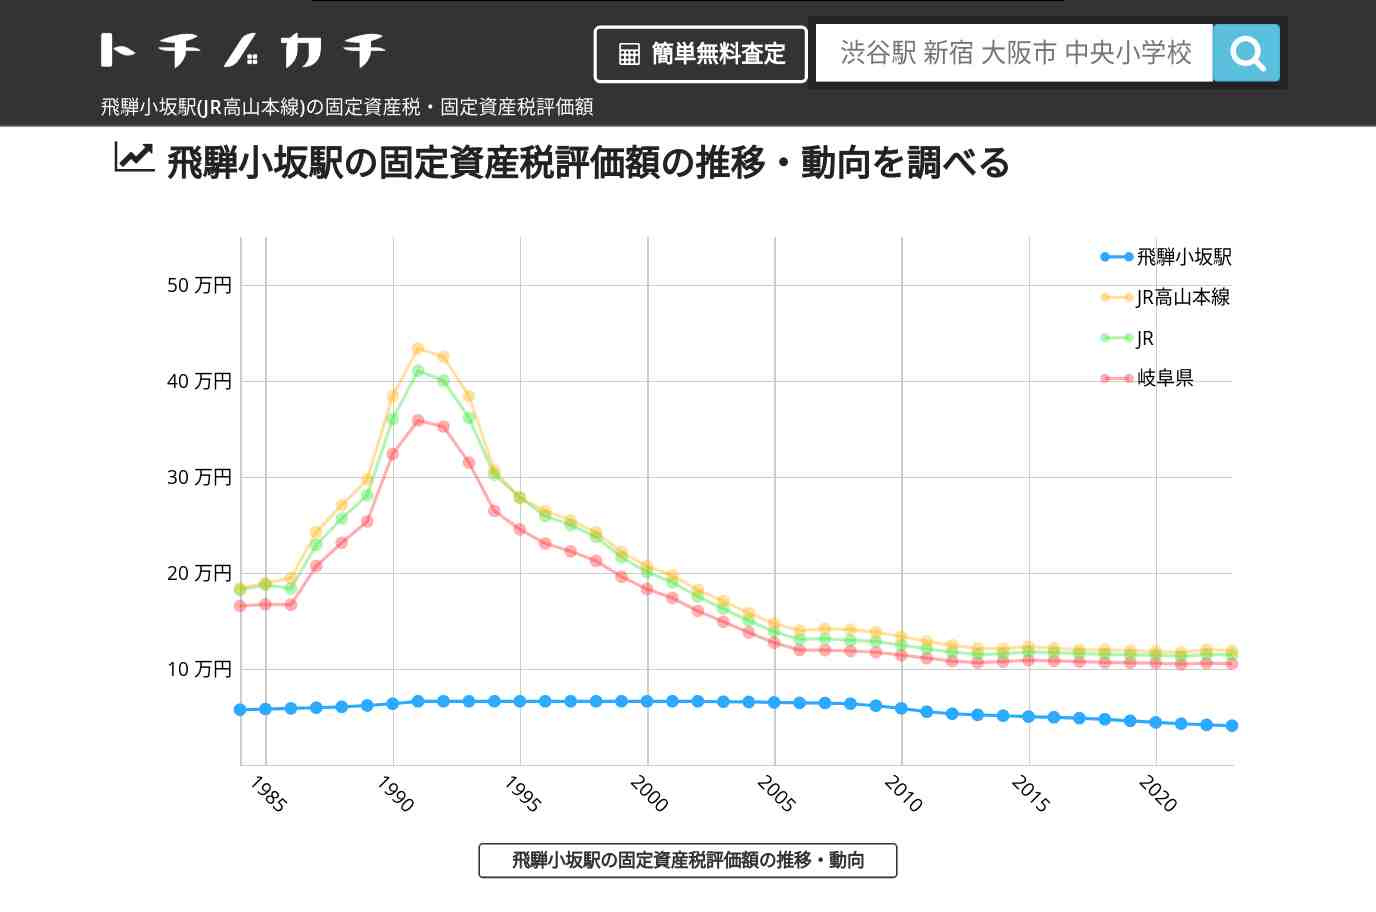 飛騨小坂駅(JR高山本線)の固定資産税・固定資産税評価額 | トチノカチ